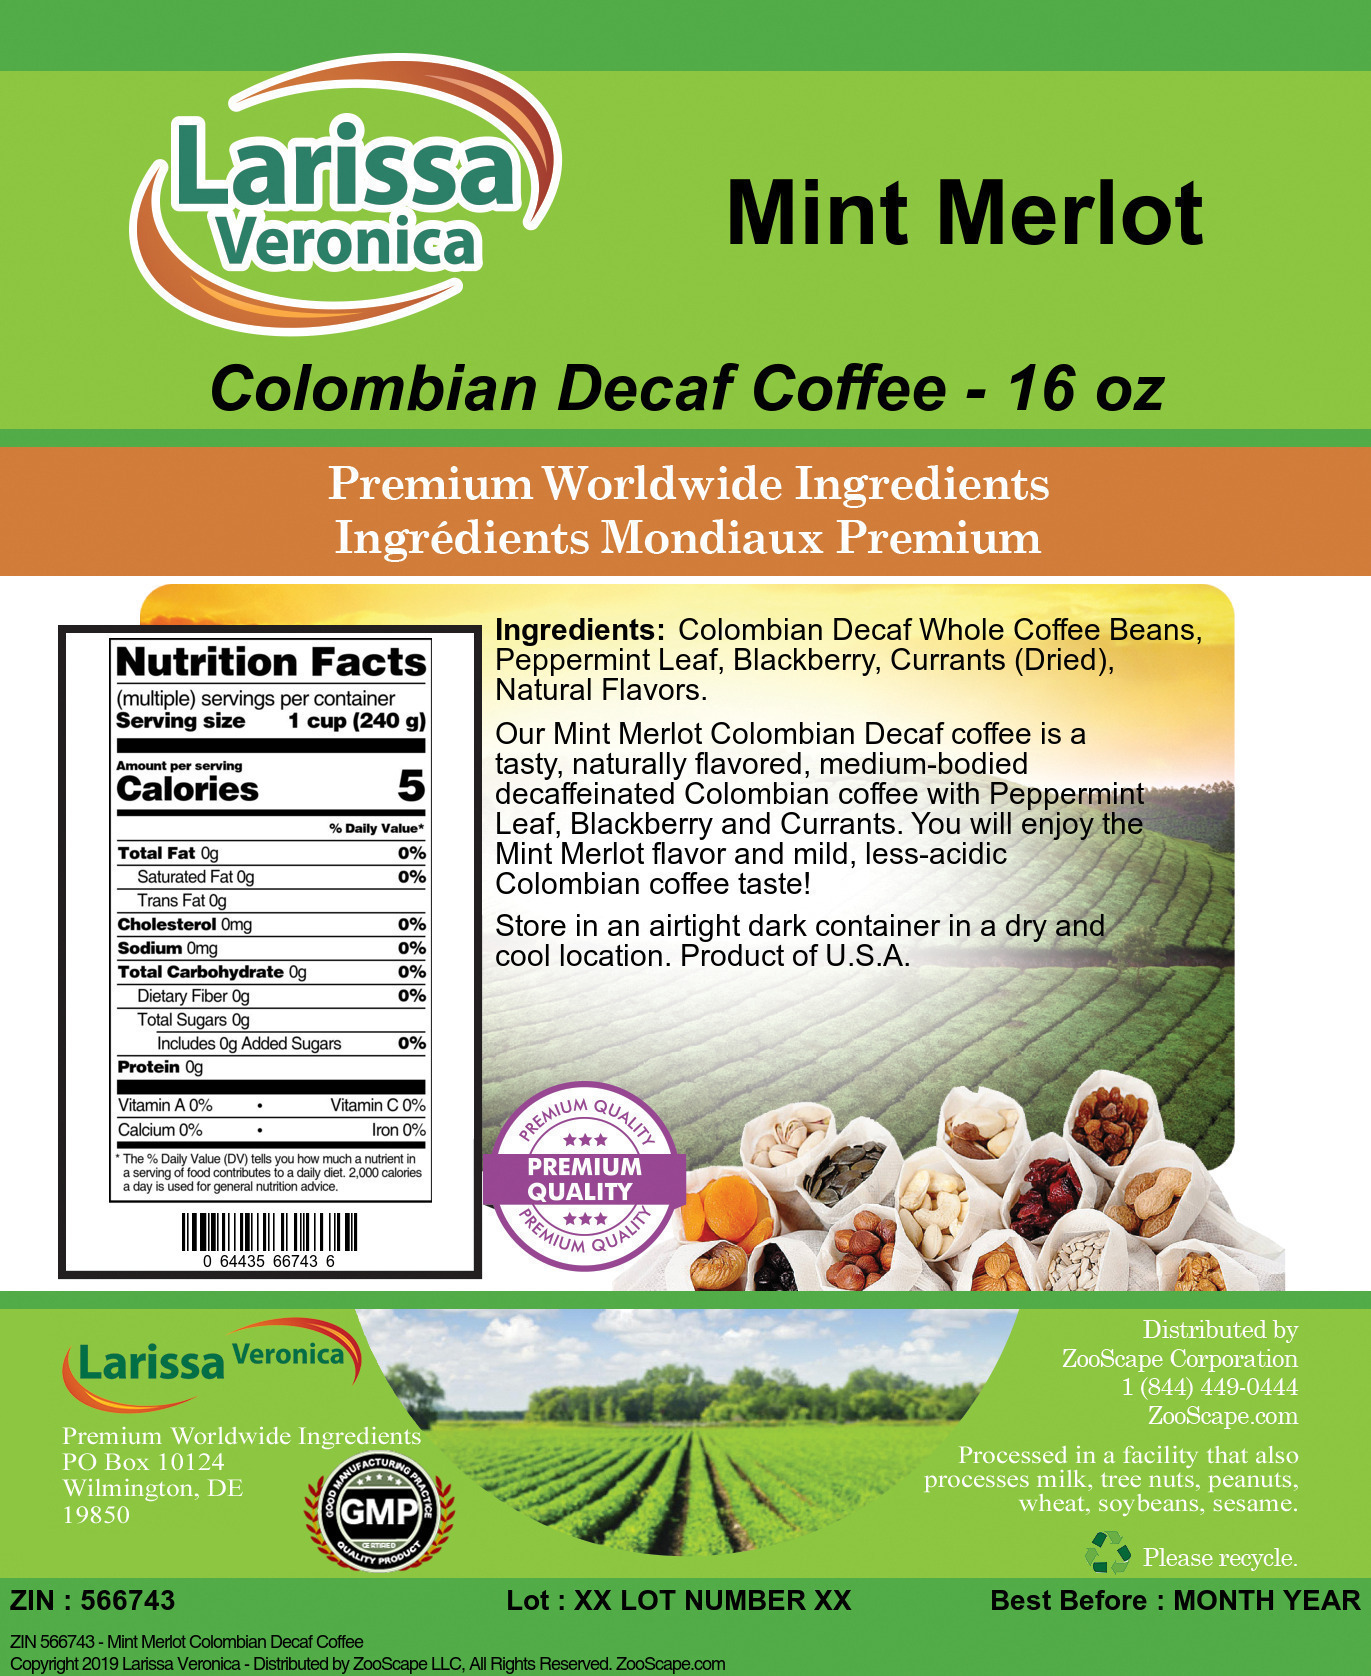 Mint Merlot Colombian Decaf Coffee - Label